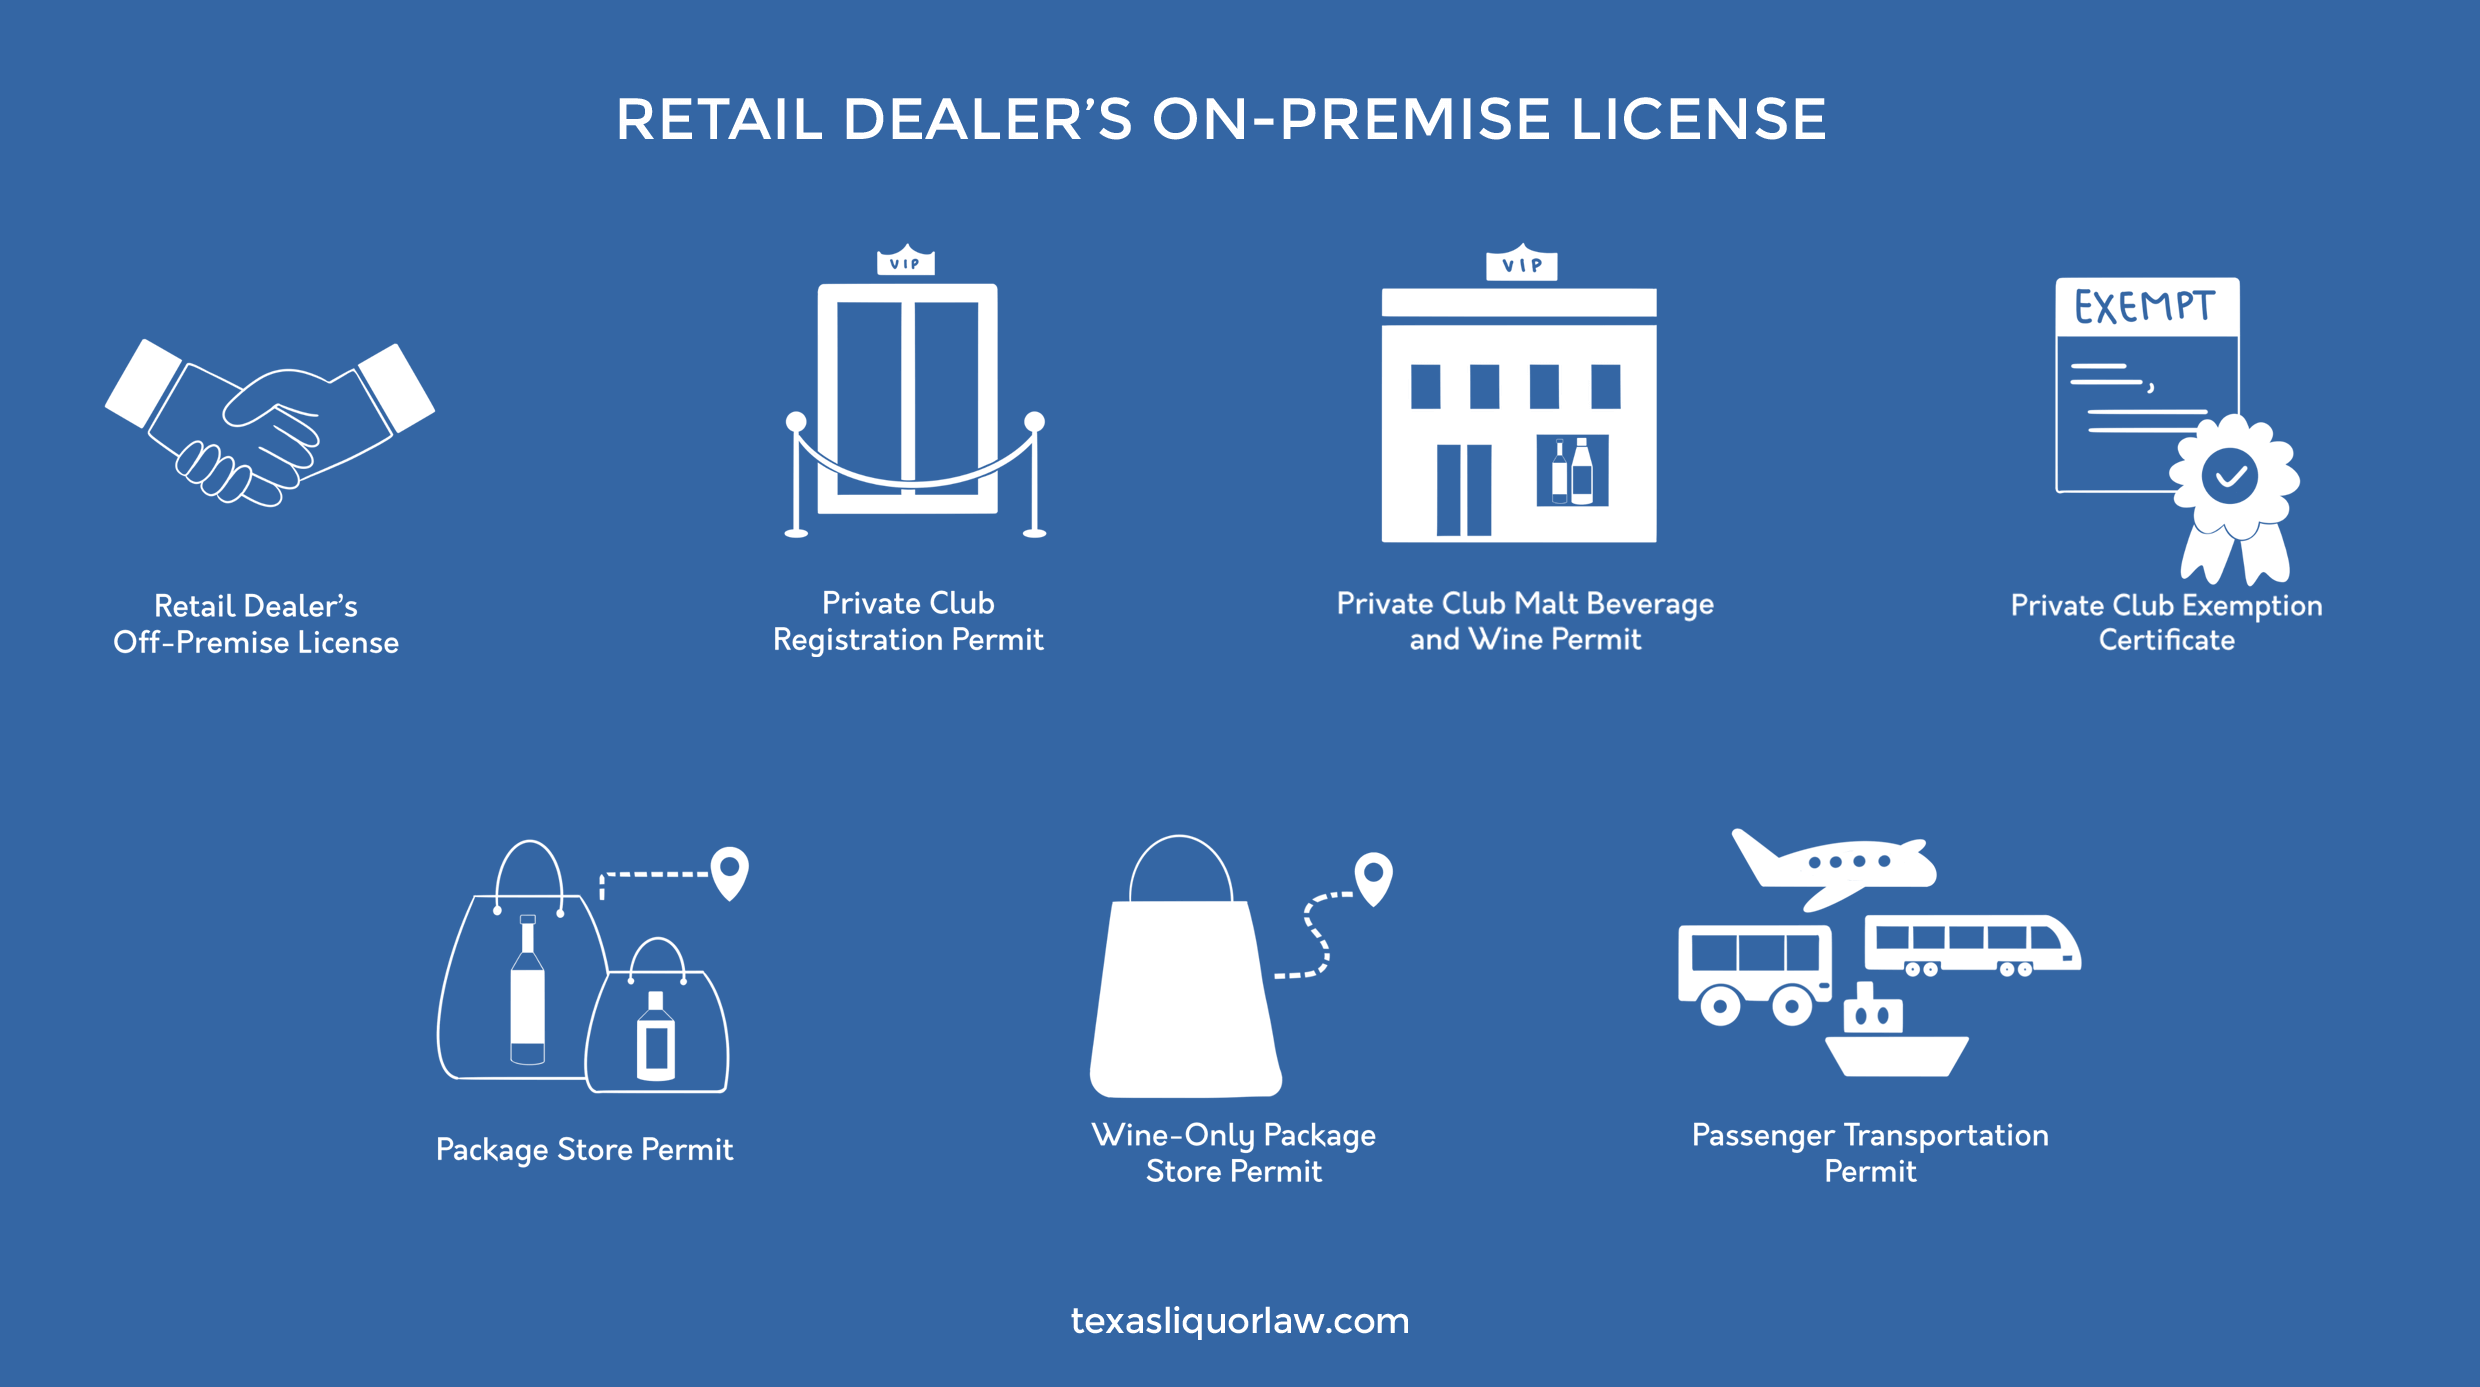 TABC - Retail Dealer's On Premise License